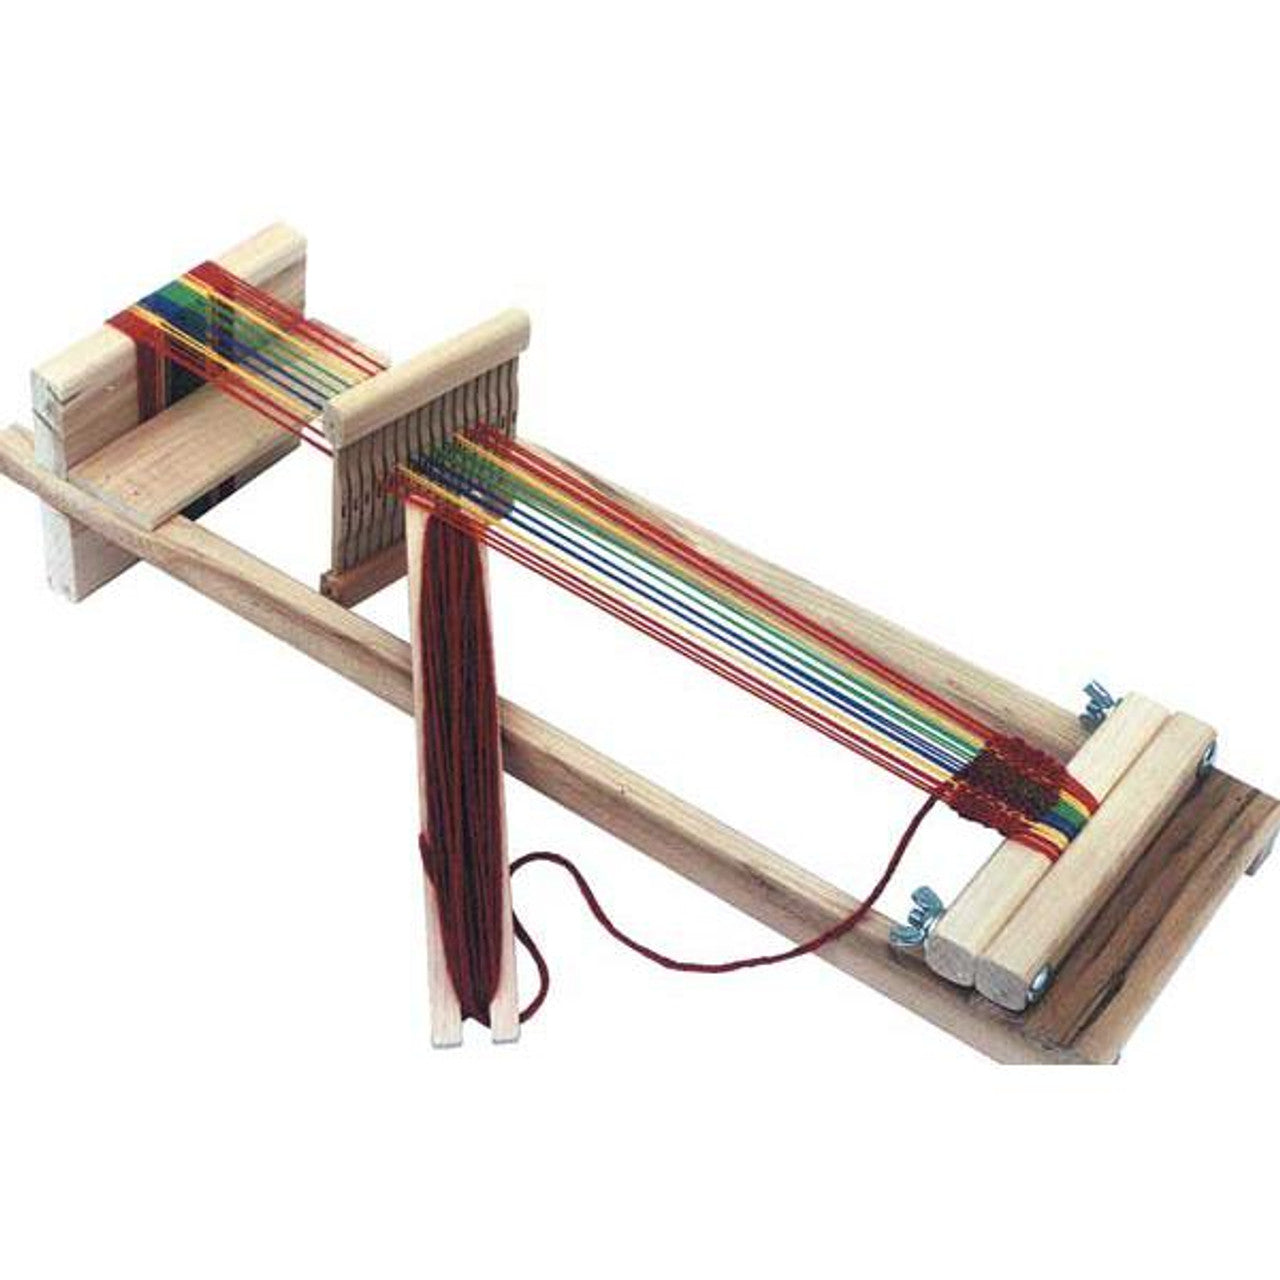 Weaving Loom Retro Craft Kit® – RunMDeal